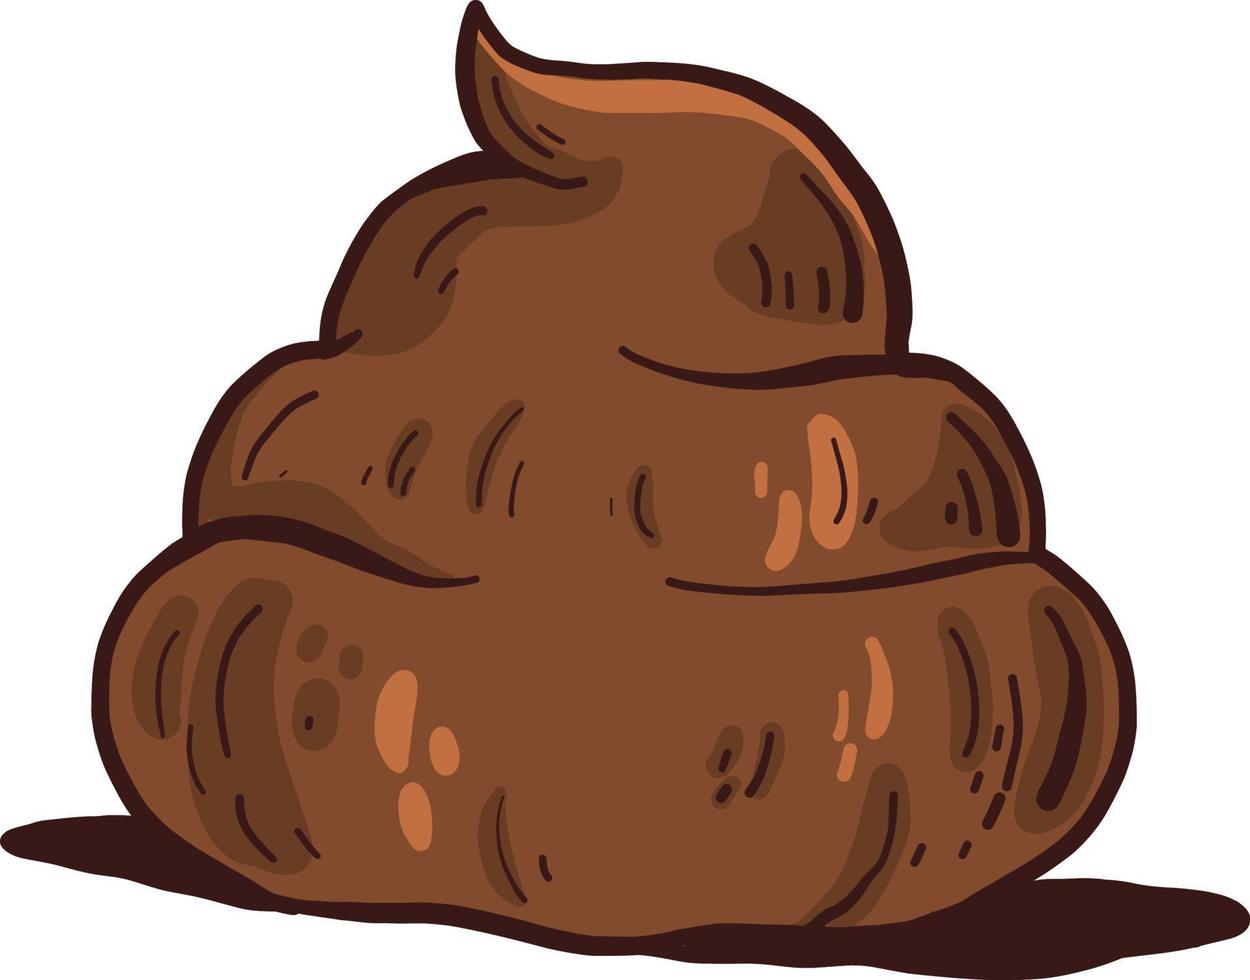 Brown poop,illustration,vector on white background vector